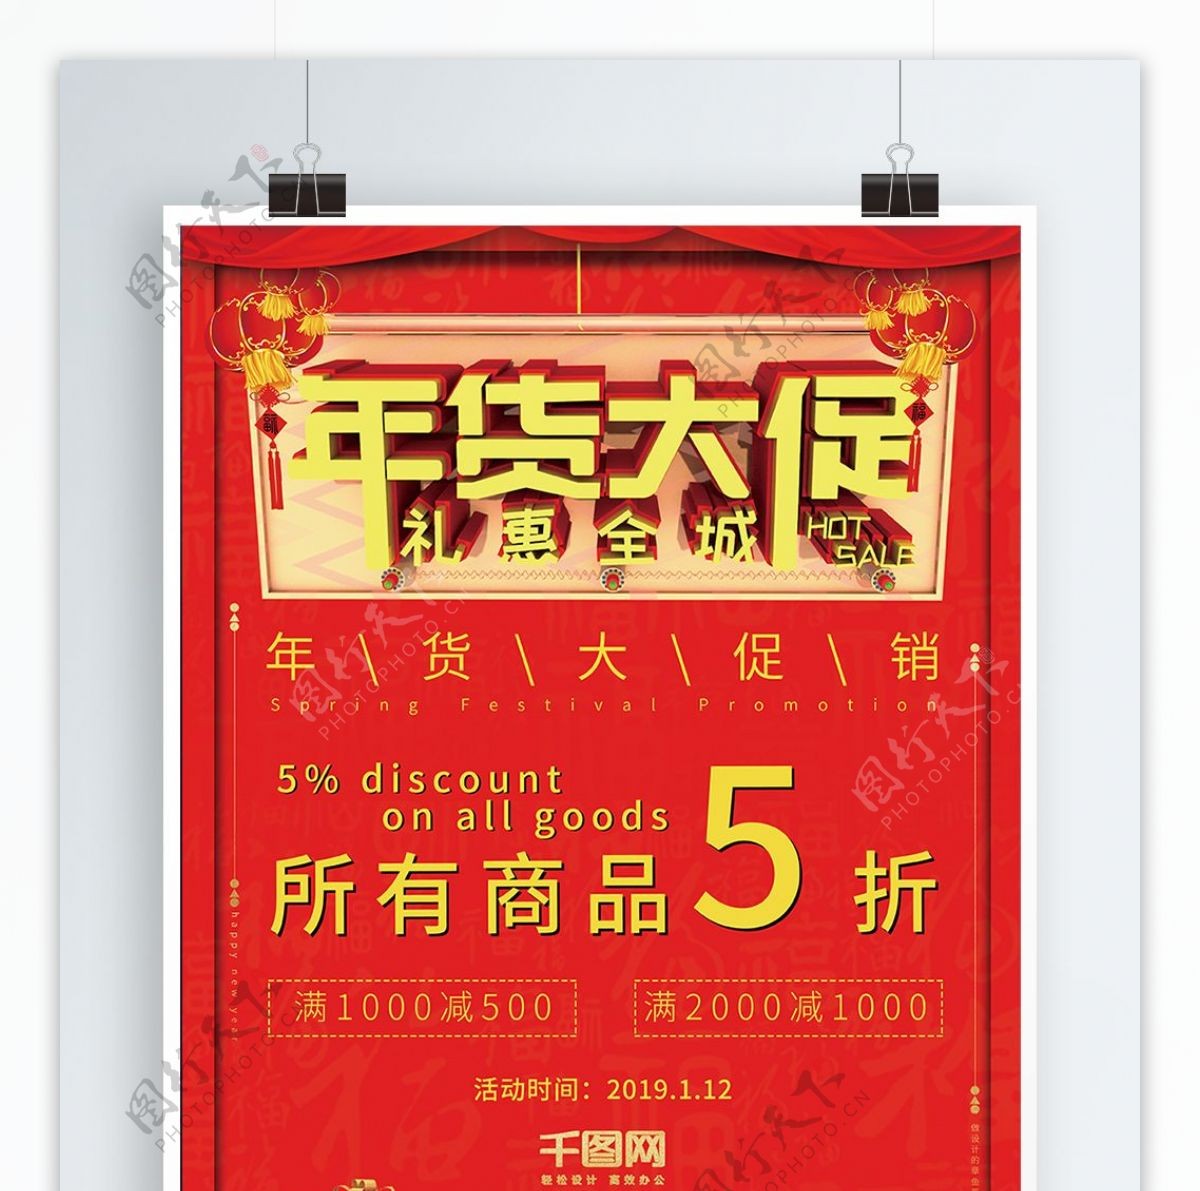 C4D年货节促销喜庆气氛海报